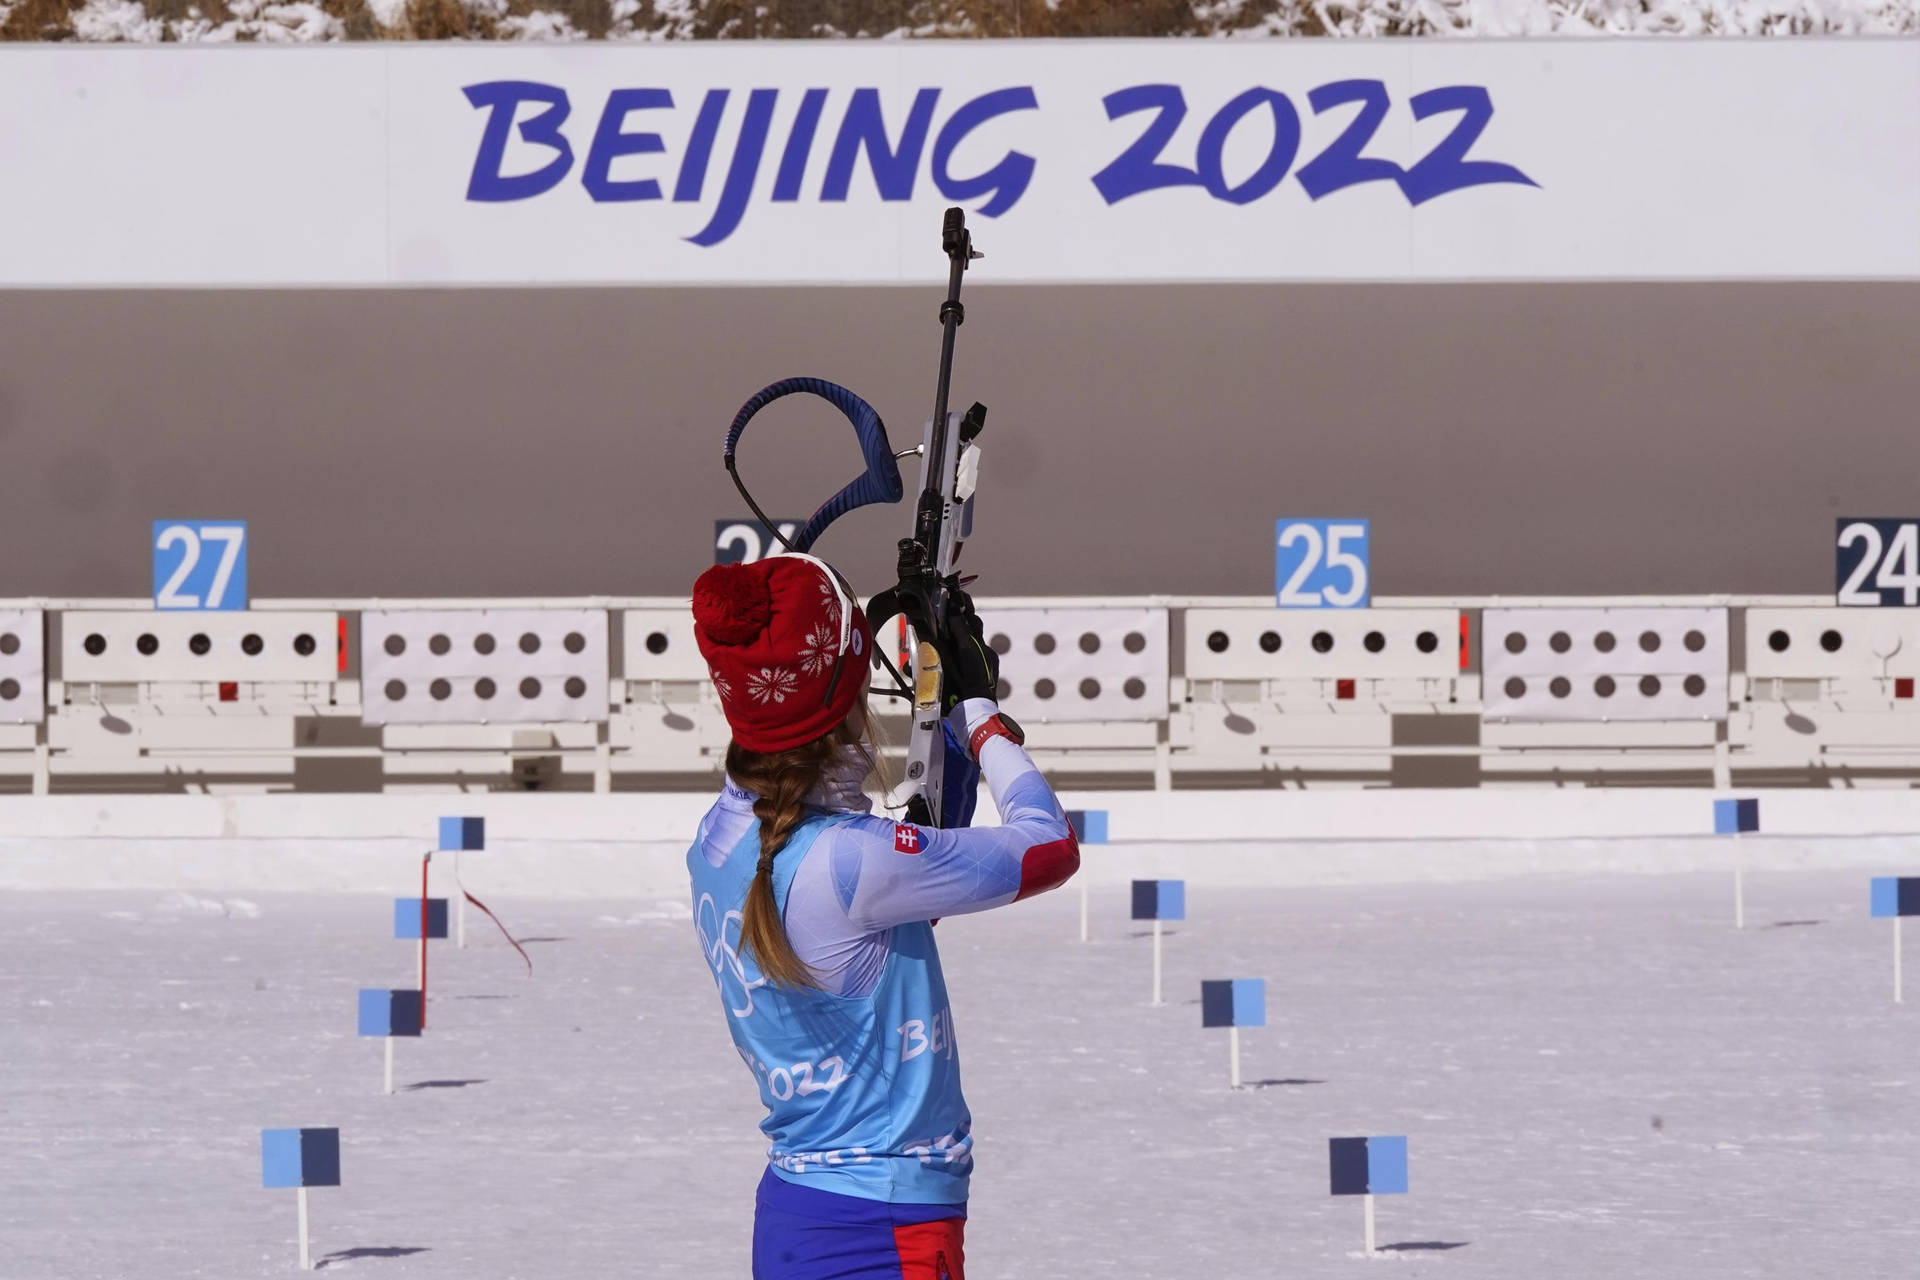 Biathlon Ivona Fialková Training Beijing 2022 Wallpaper